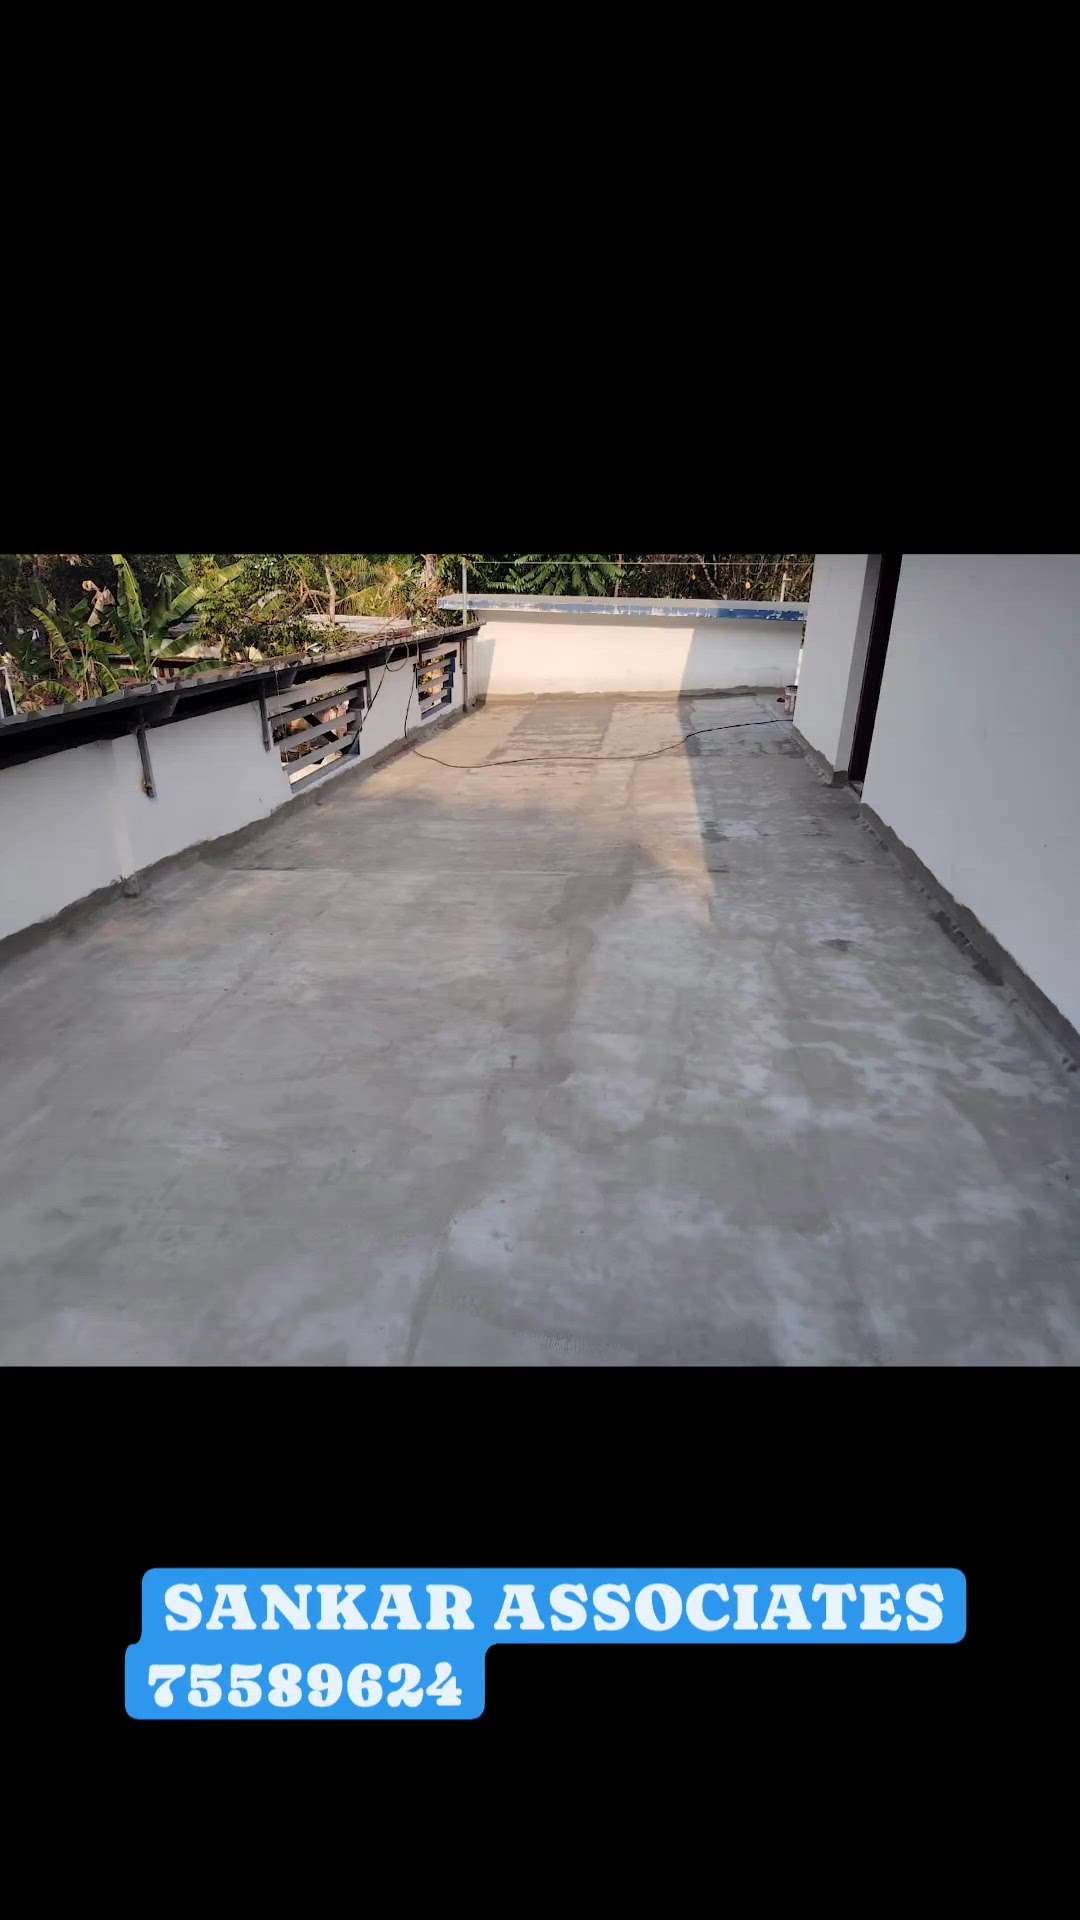 On going Project
Location : Charummood 

Material : Sika

Scope of work:Terrace Waterproofing

For Enquiry kindly contact us
7558962449,7994755349
Website:http://sankarassociatesindia.com/
Mail id:Sankarassociates2022@gmail.com

#waterproofing #sankarassociates #civil #construction
#waterproofing #leakage #putty #Mavelikkara #kerala #india #waterproof #aranmula #waterproofingsolutions #kerala #leakage #kerala #stopleakage #punalur #Mavelikkara